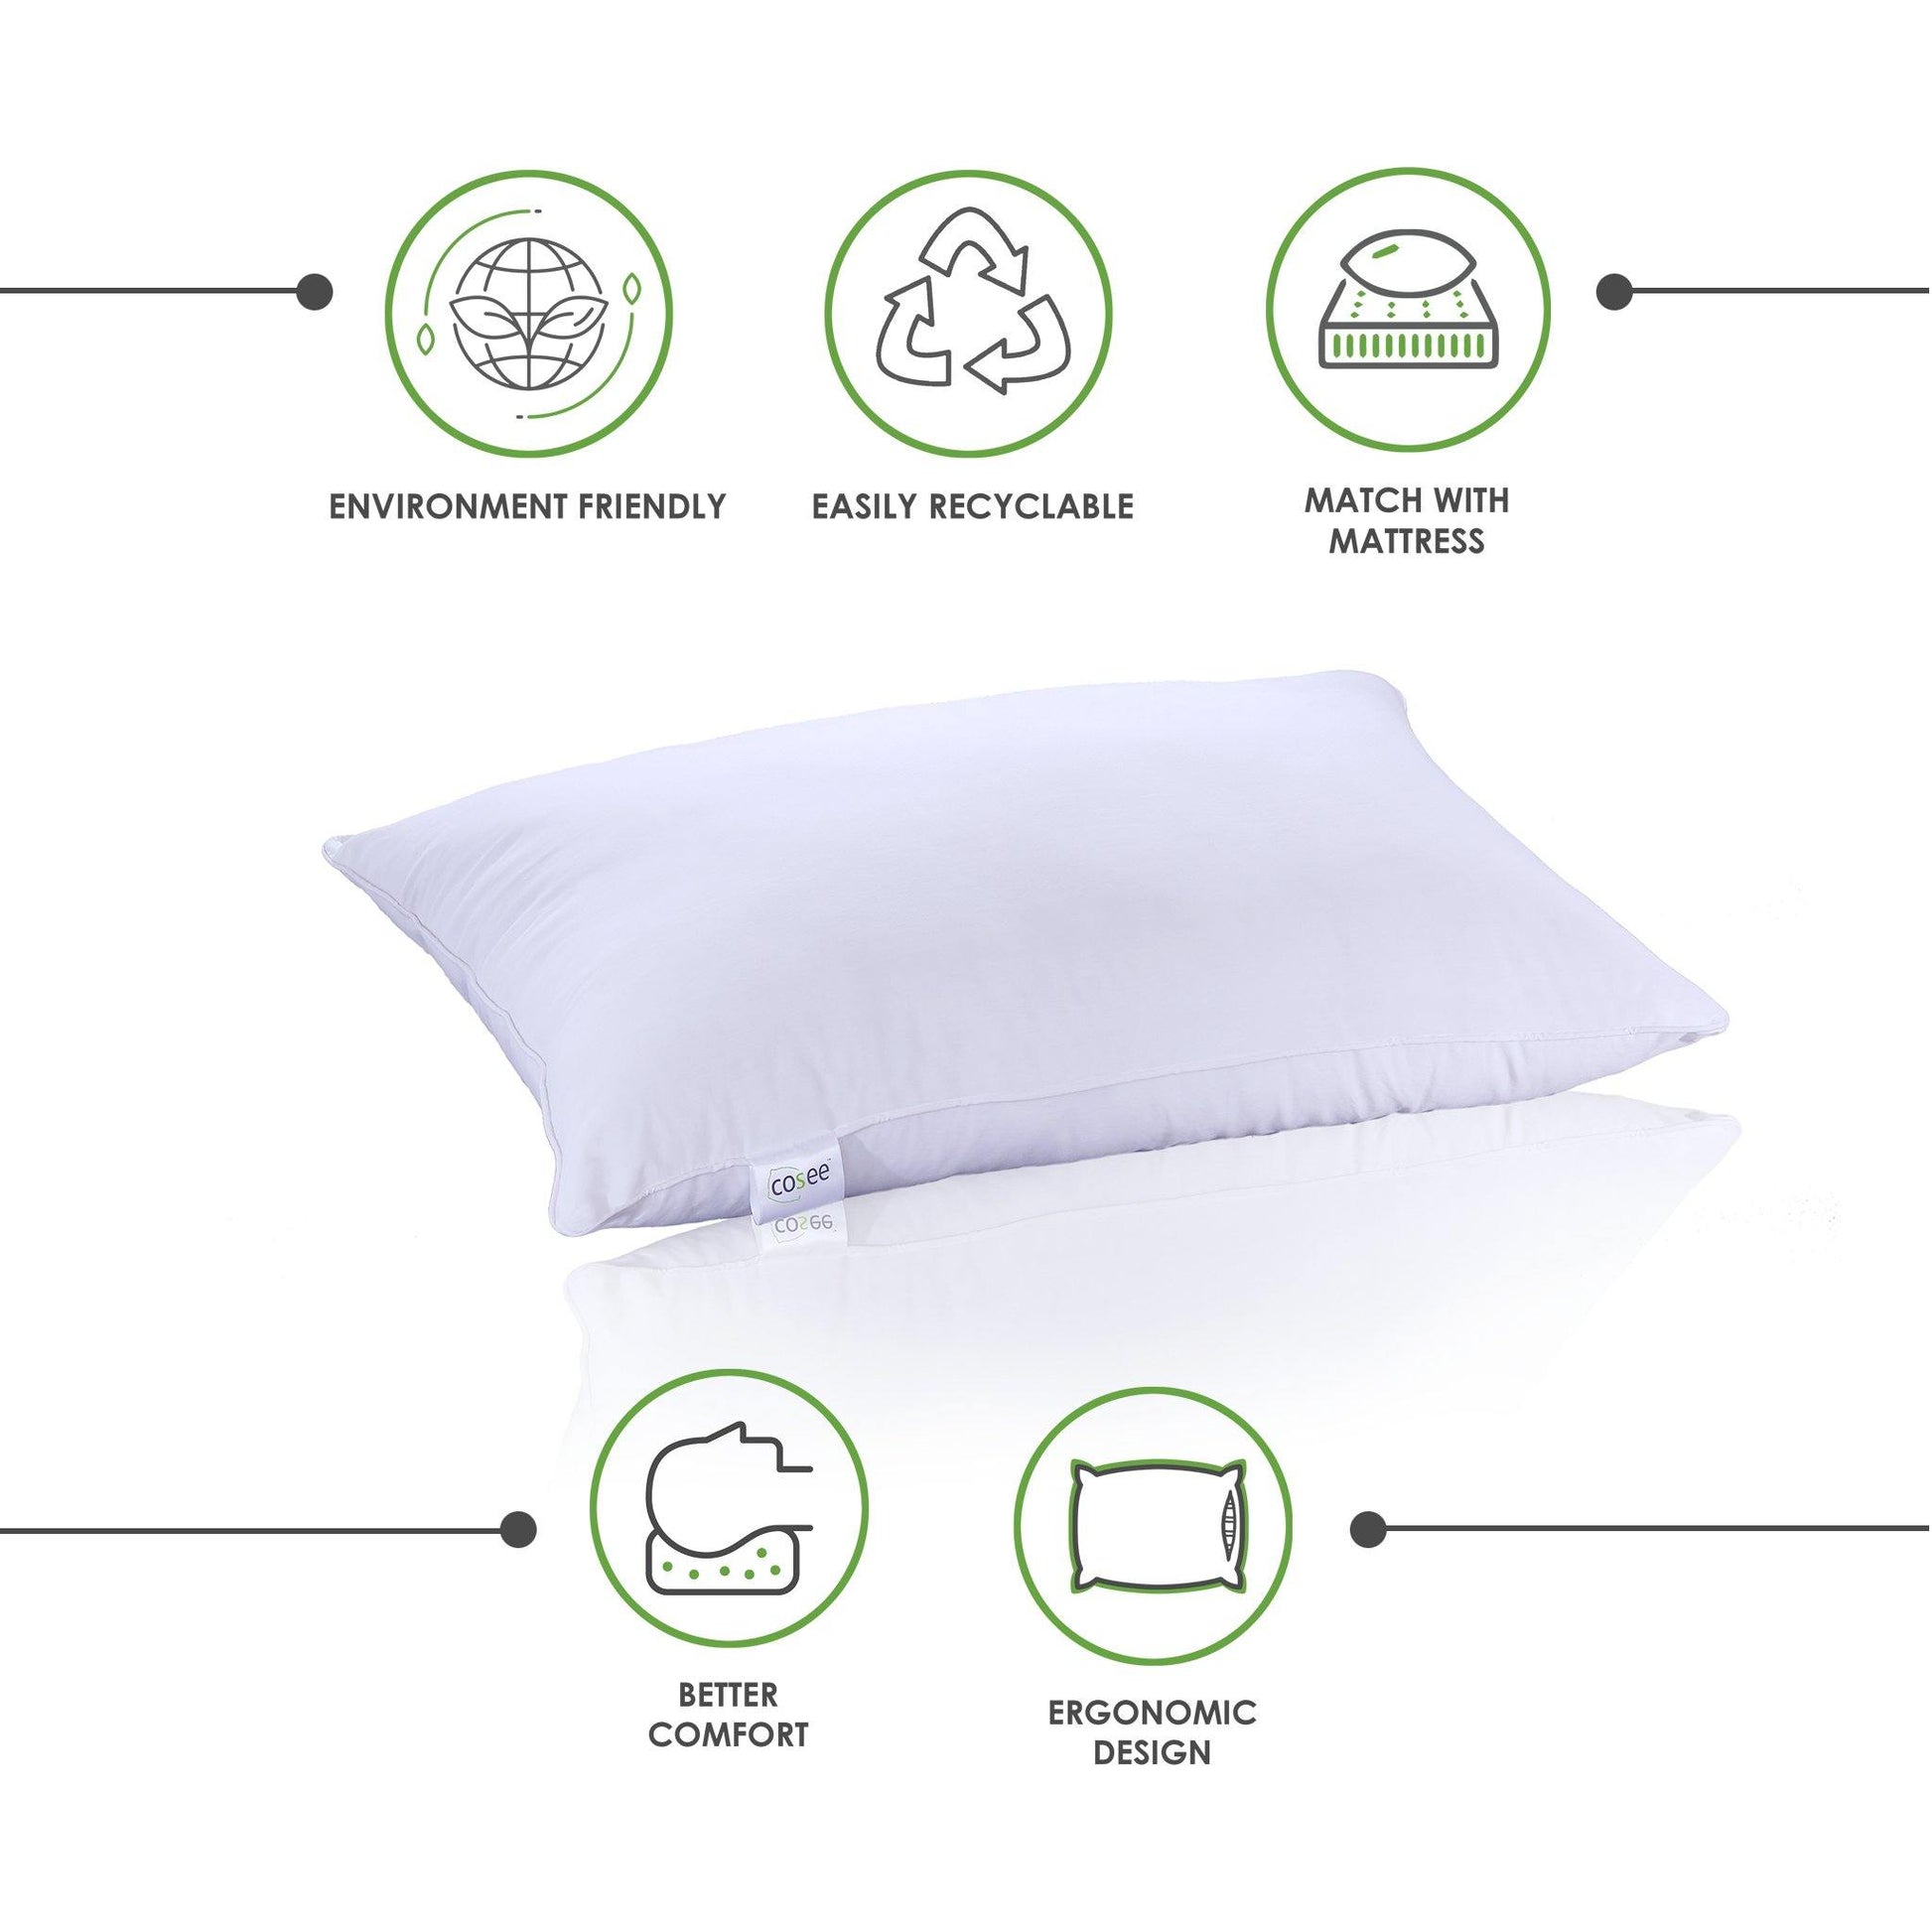 Cosee Basic Micro Fiber White Pillow - SleepCosee